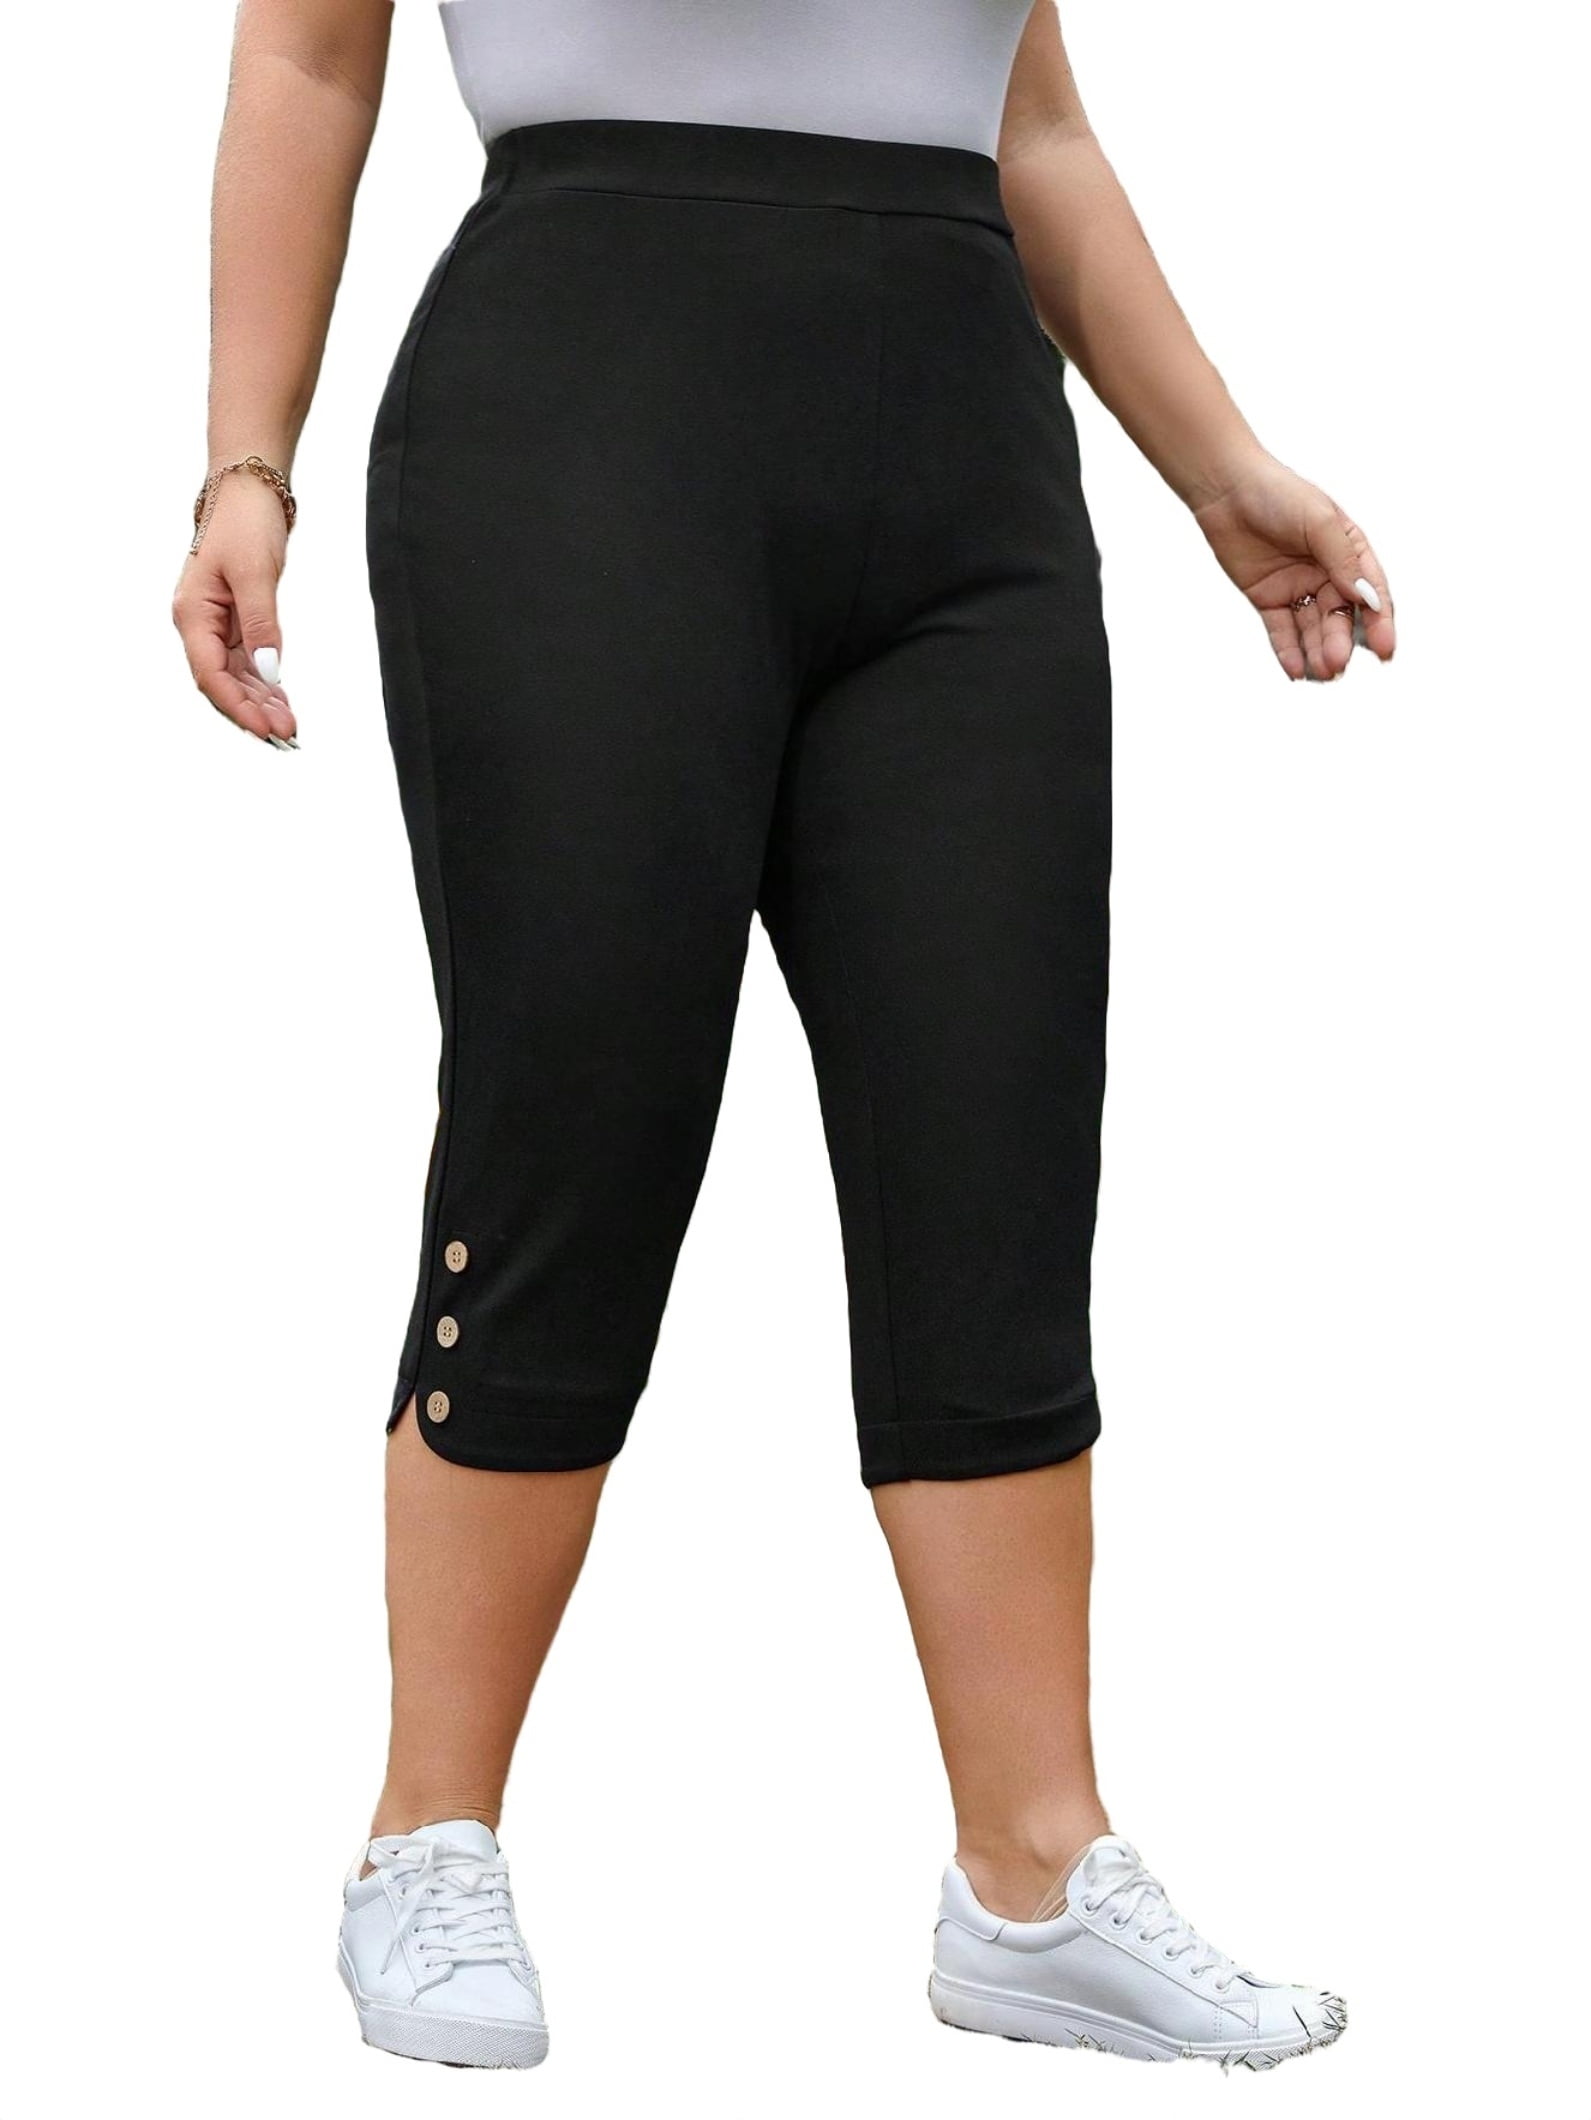 Women's Casual Plain Skinny Black Capris Plus Size Pants 2XL (16)